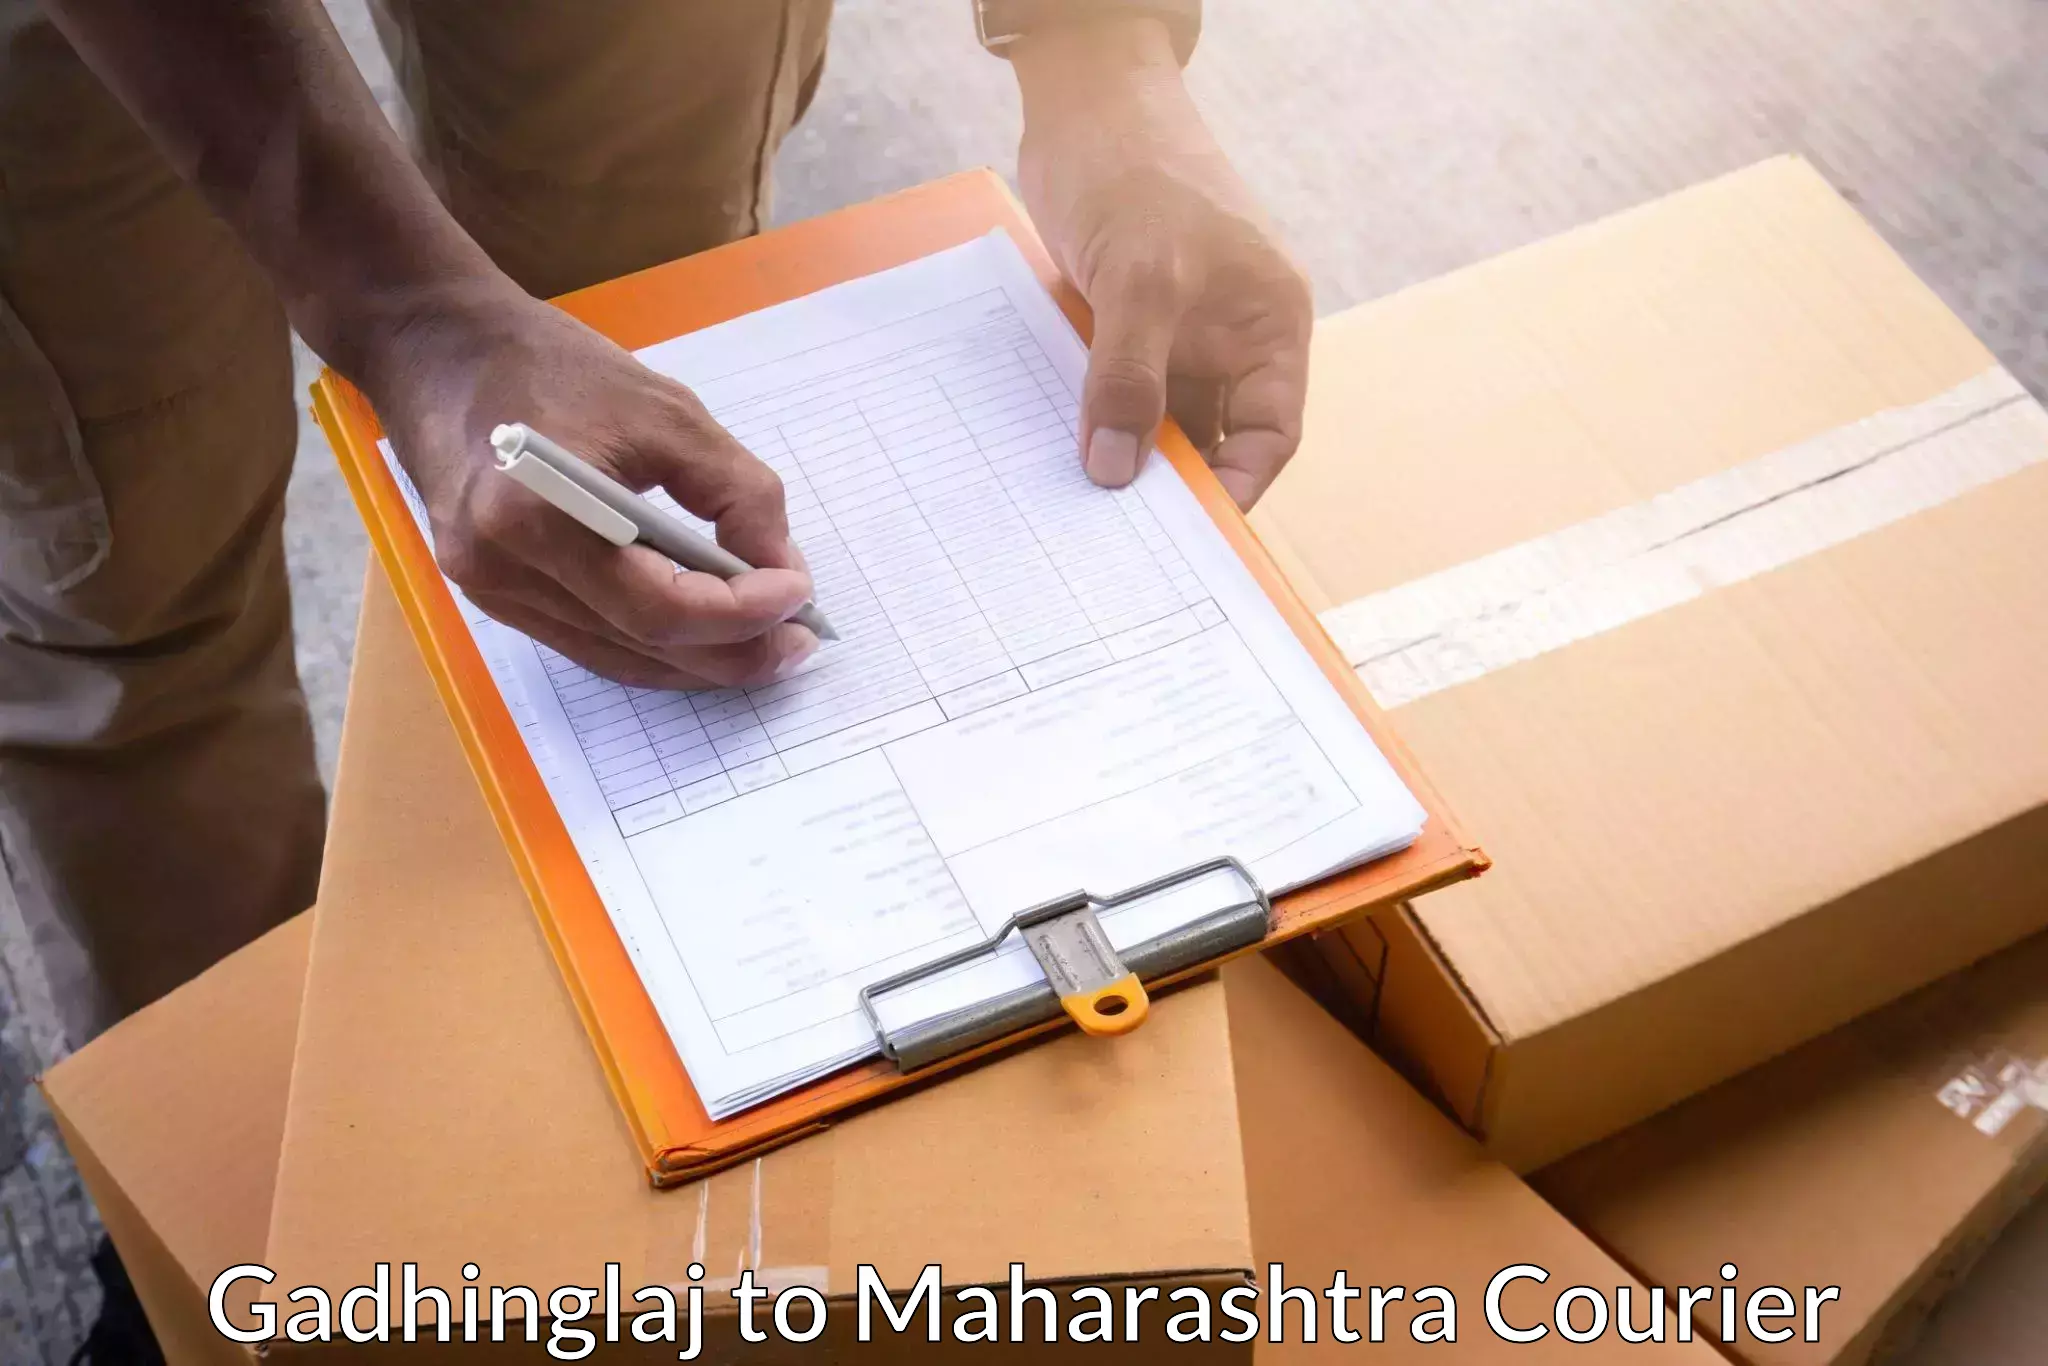 Global courier networks Gadhinglaj to Maharashtra